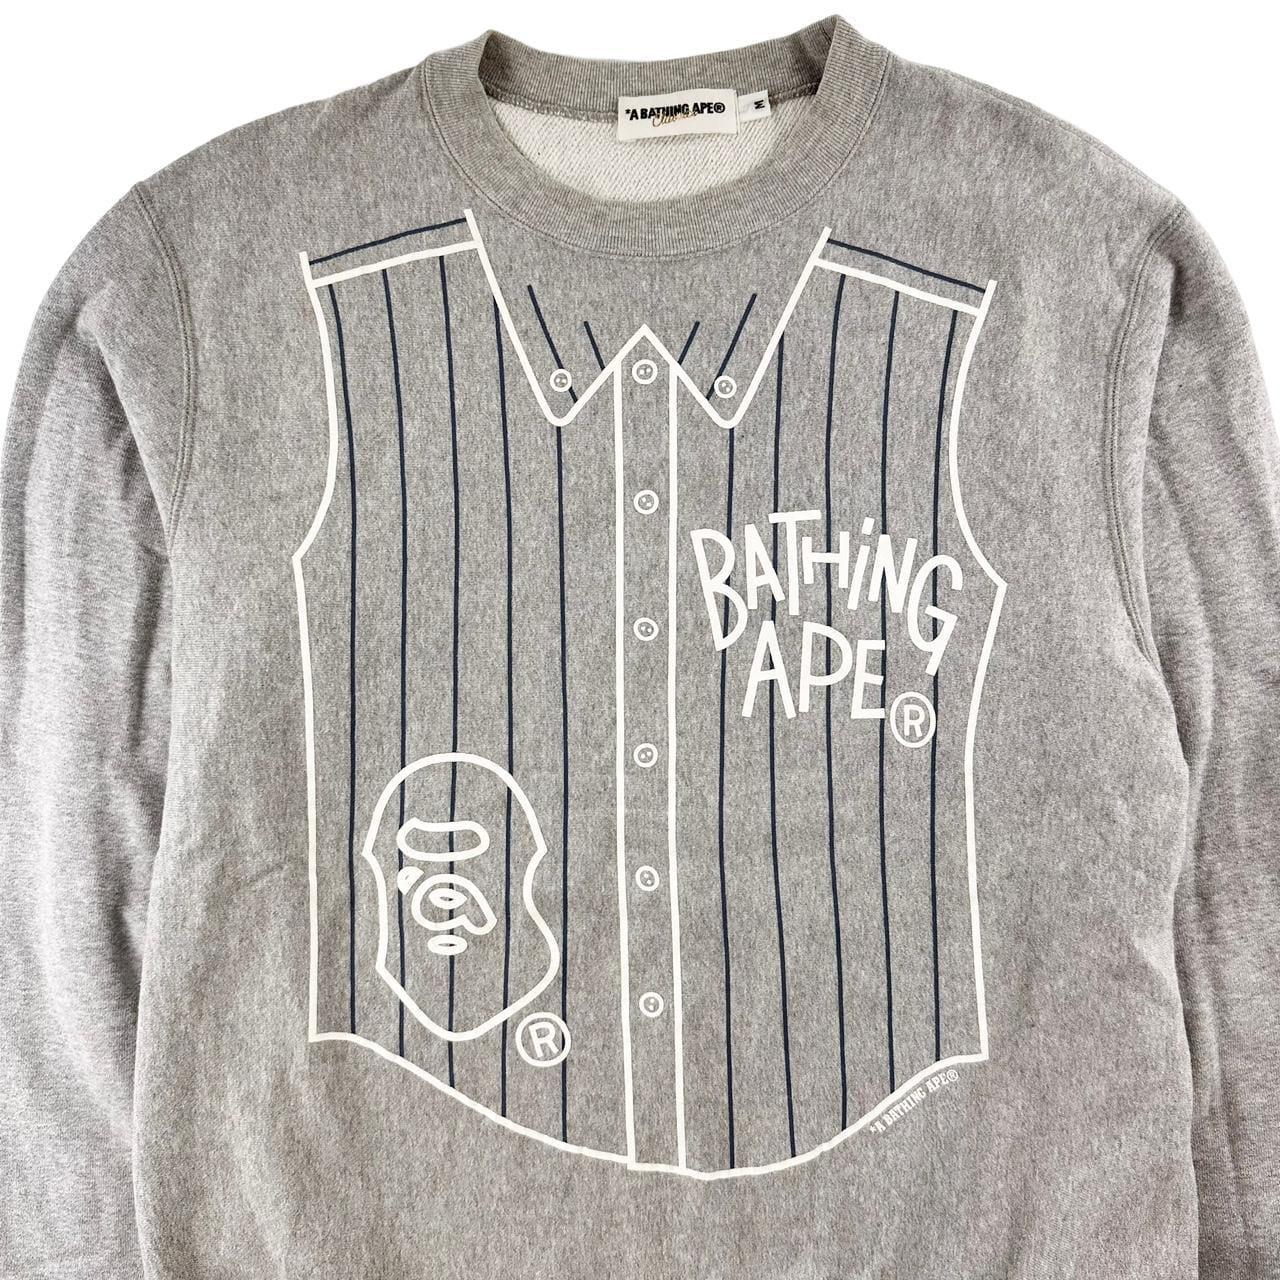 Bape shirt print jumper sweatshirt size M - Known Source